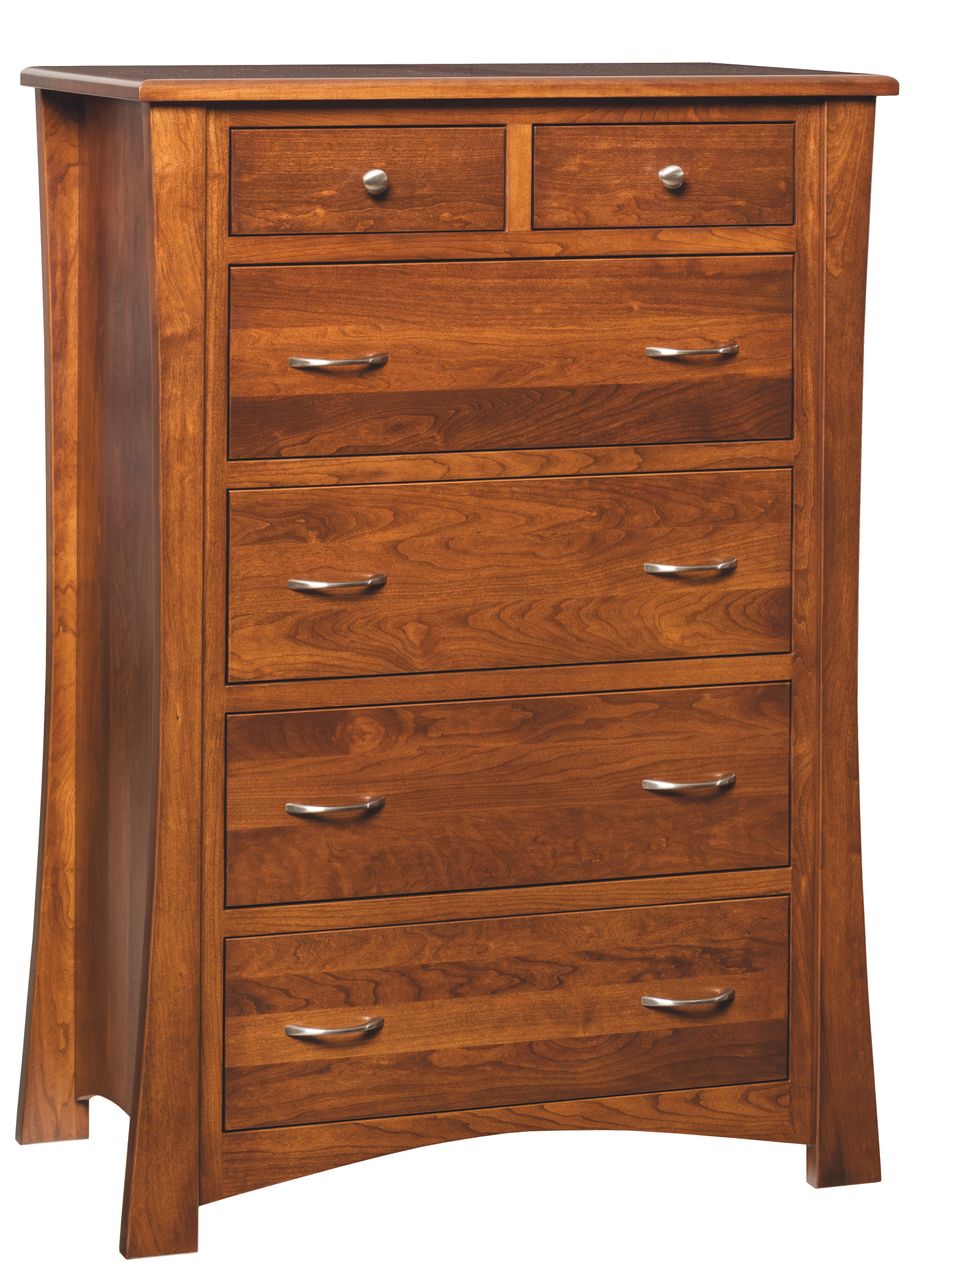 Saf norwalk 6 drawer chest